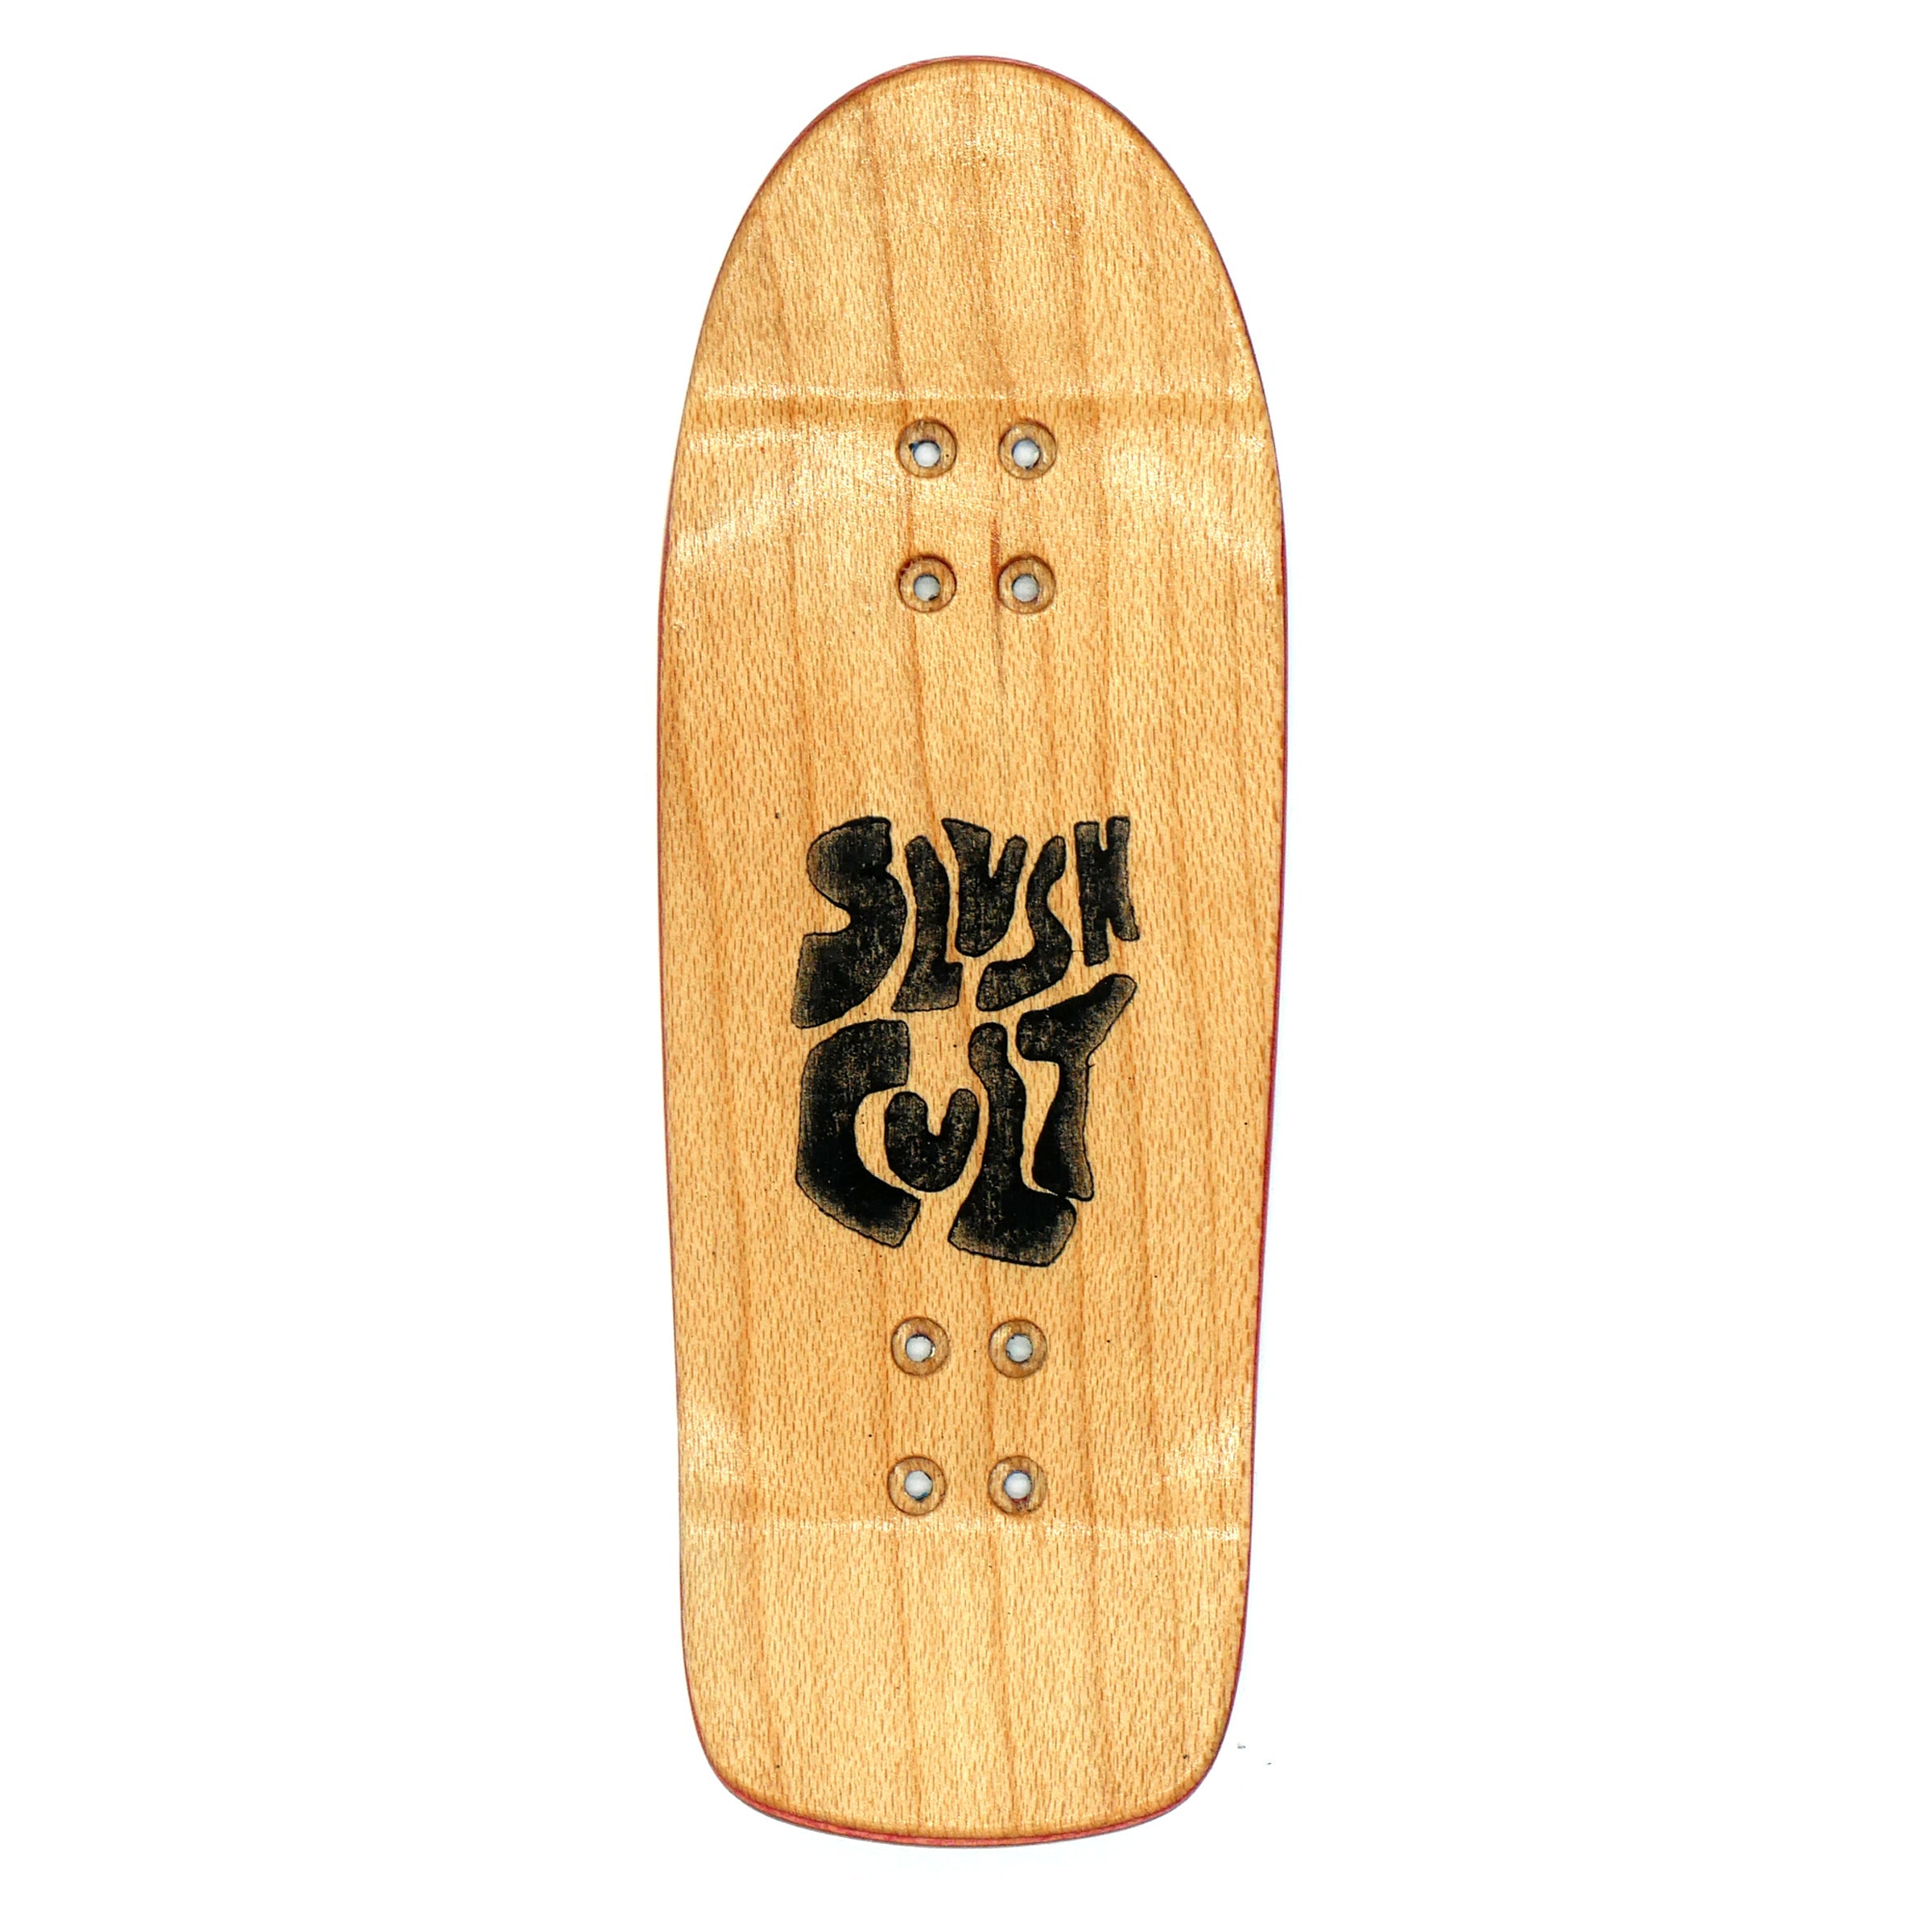 Slushcult "Slappy" Shred Stick Fingerboard MINI Skate Shop Slushcult    Slushcult